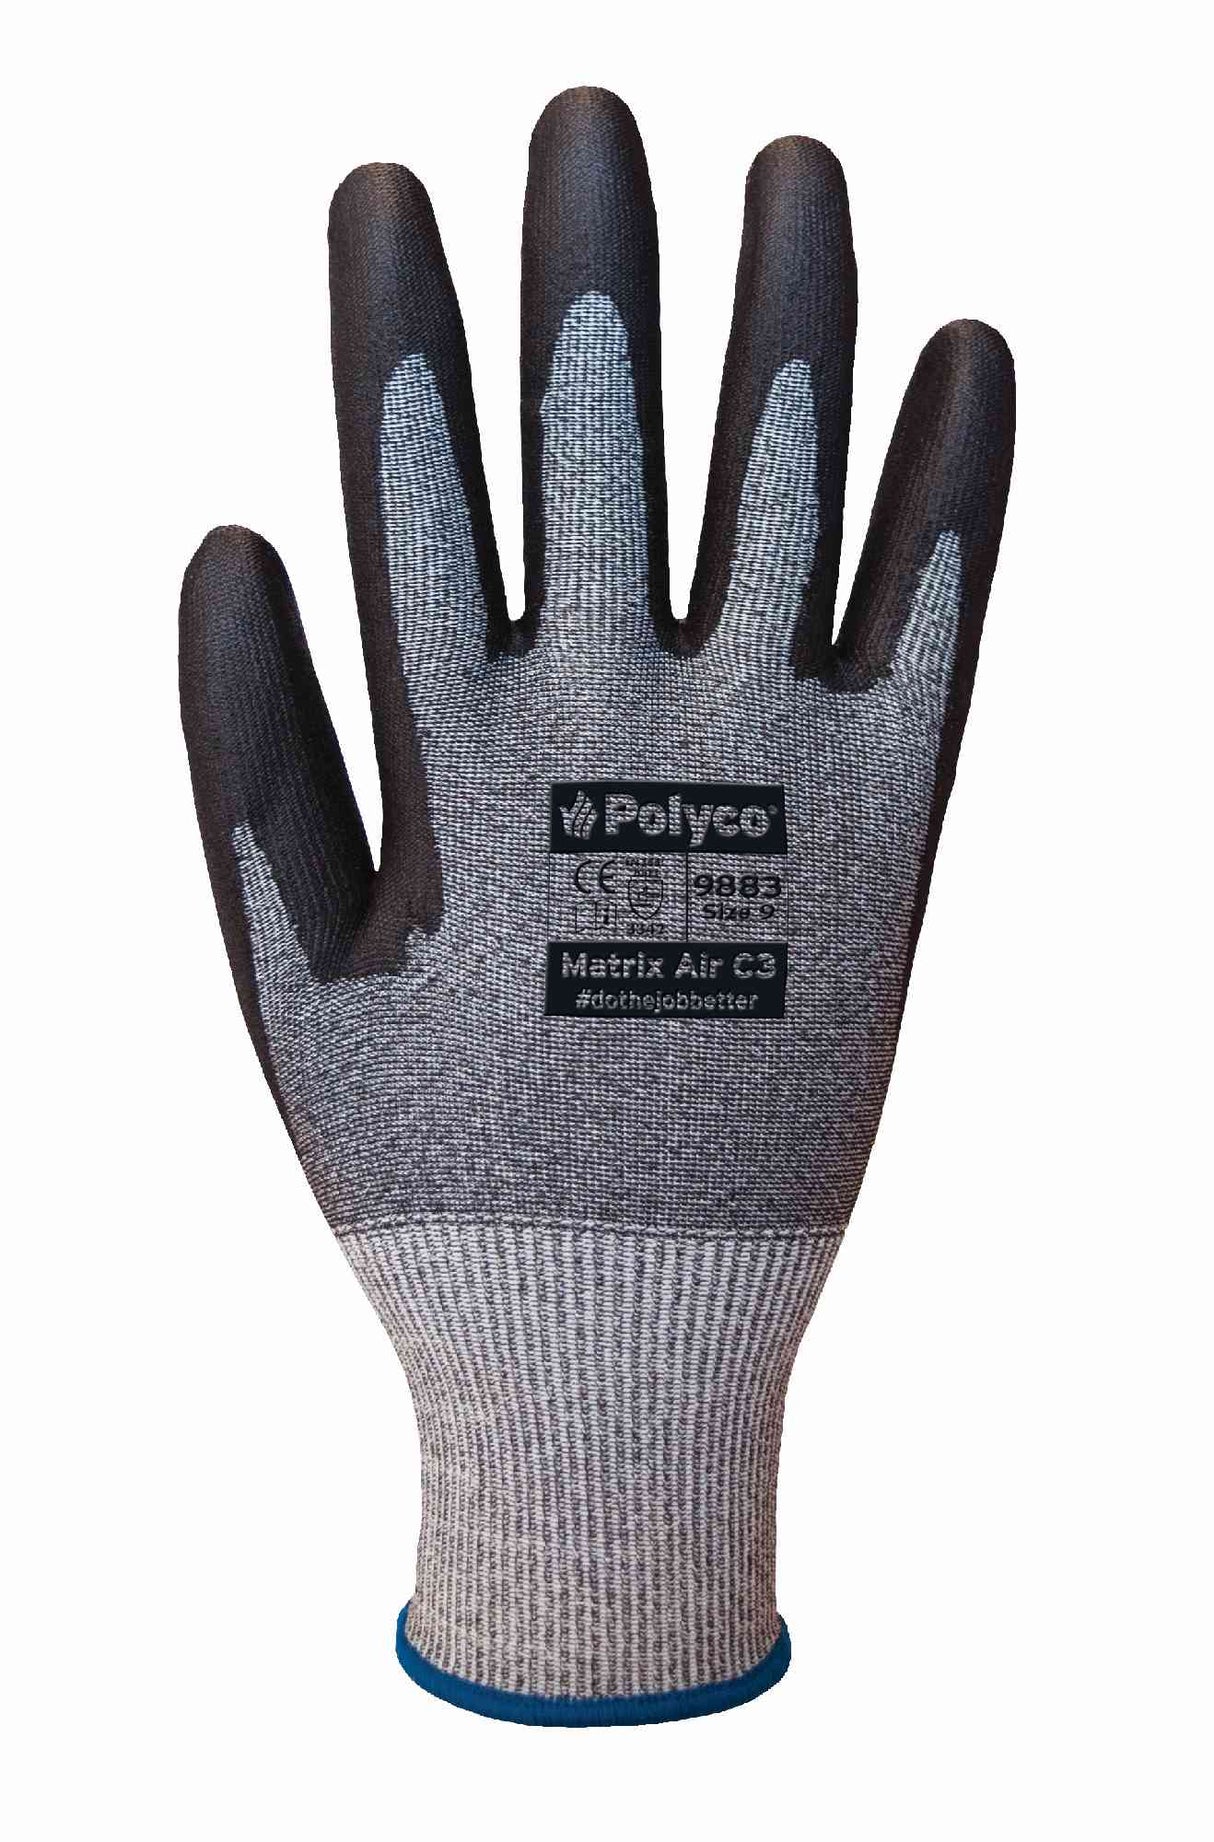 Polyco Matrix Air C3 Men Work Gloves Cut 3 Resistant PU Coating